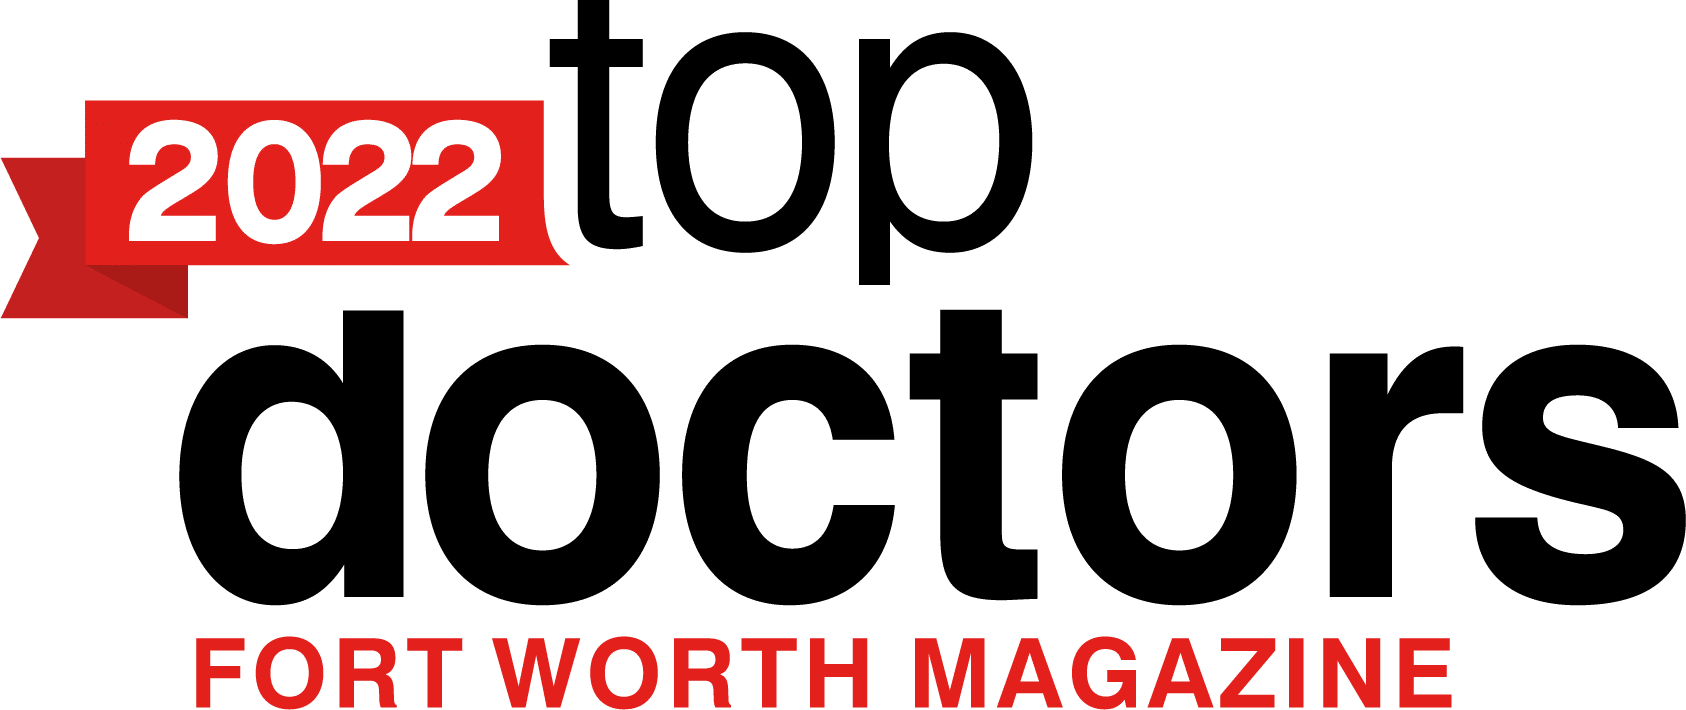 Fort Worth Magazine 2022 Top Doctors logo